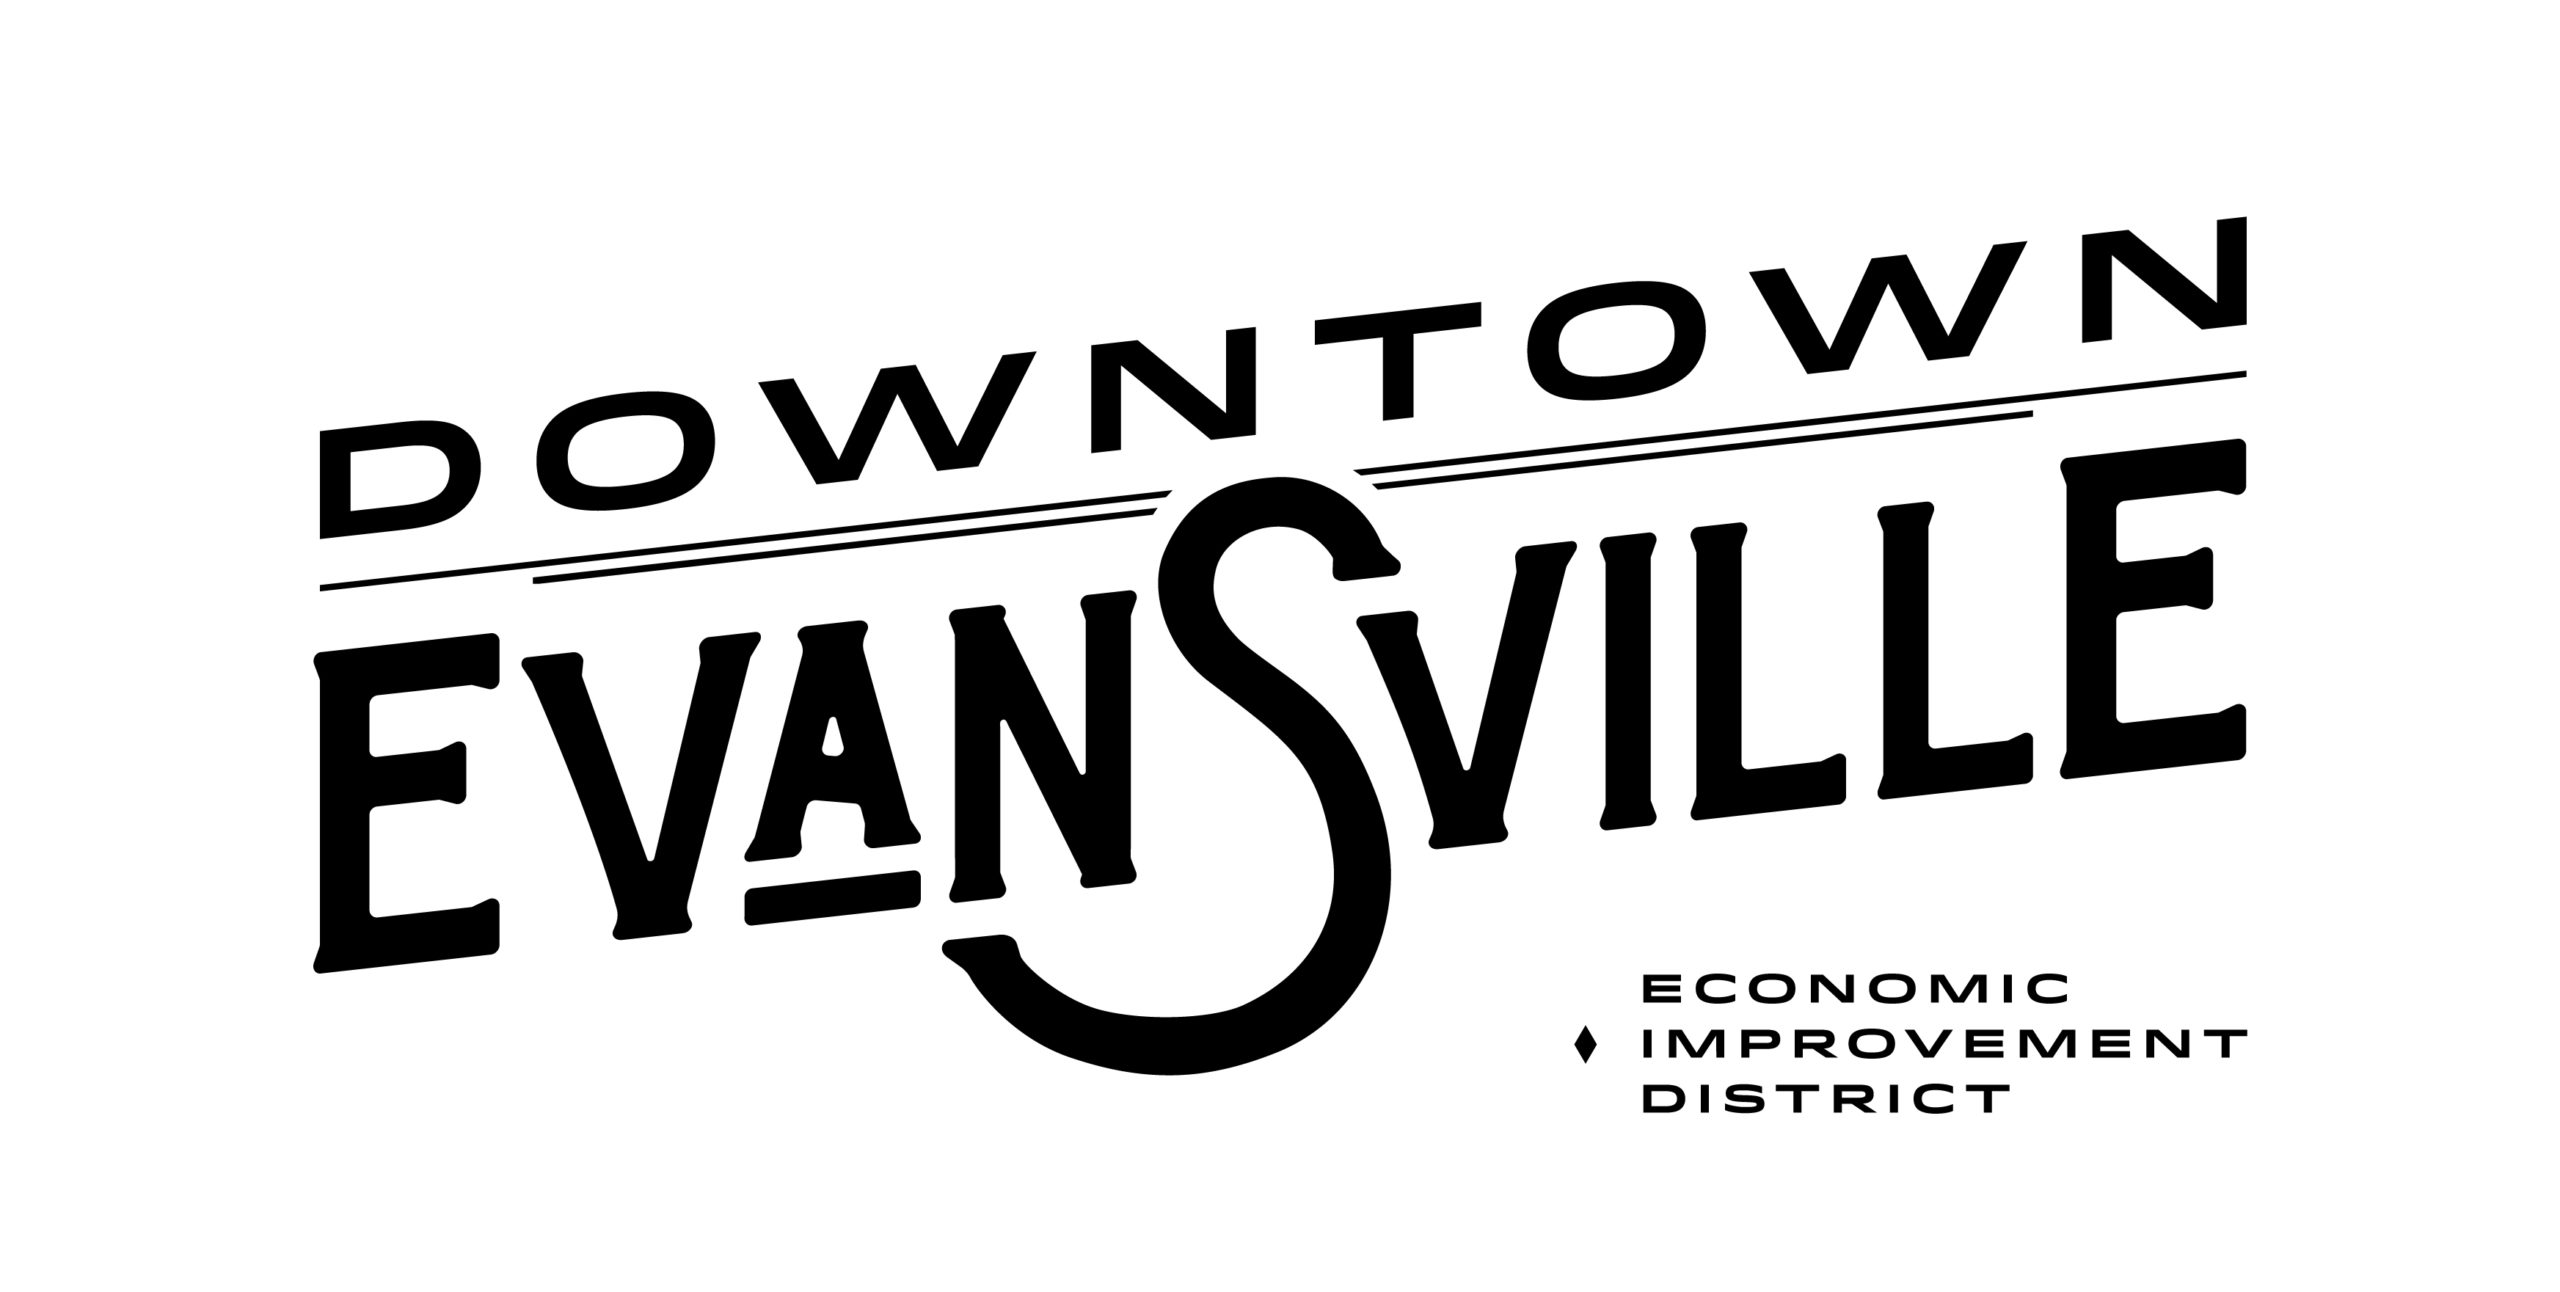 Downtown Evansville Economic Improvement District